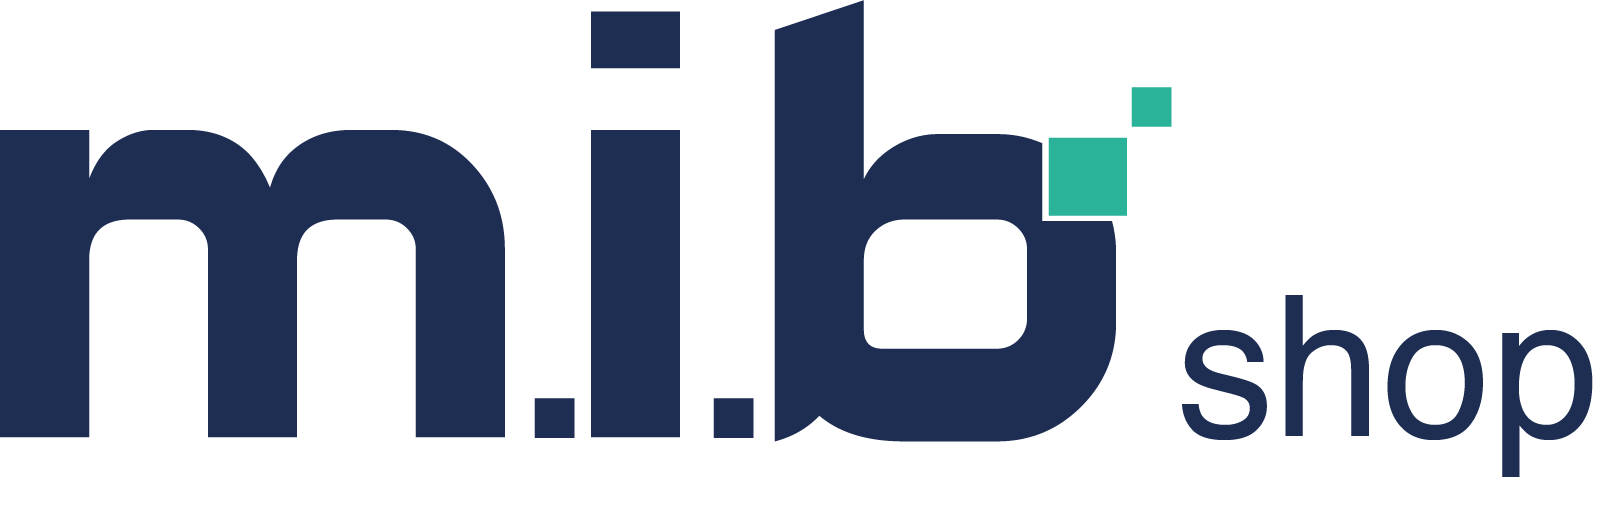 m.i.b shop logo